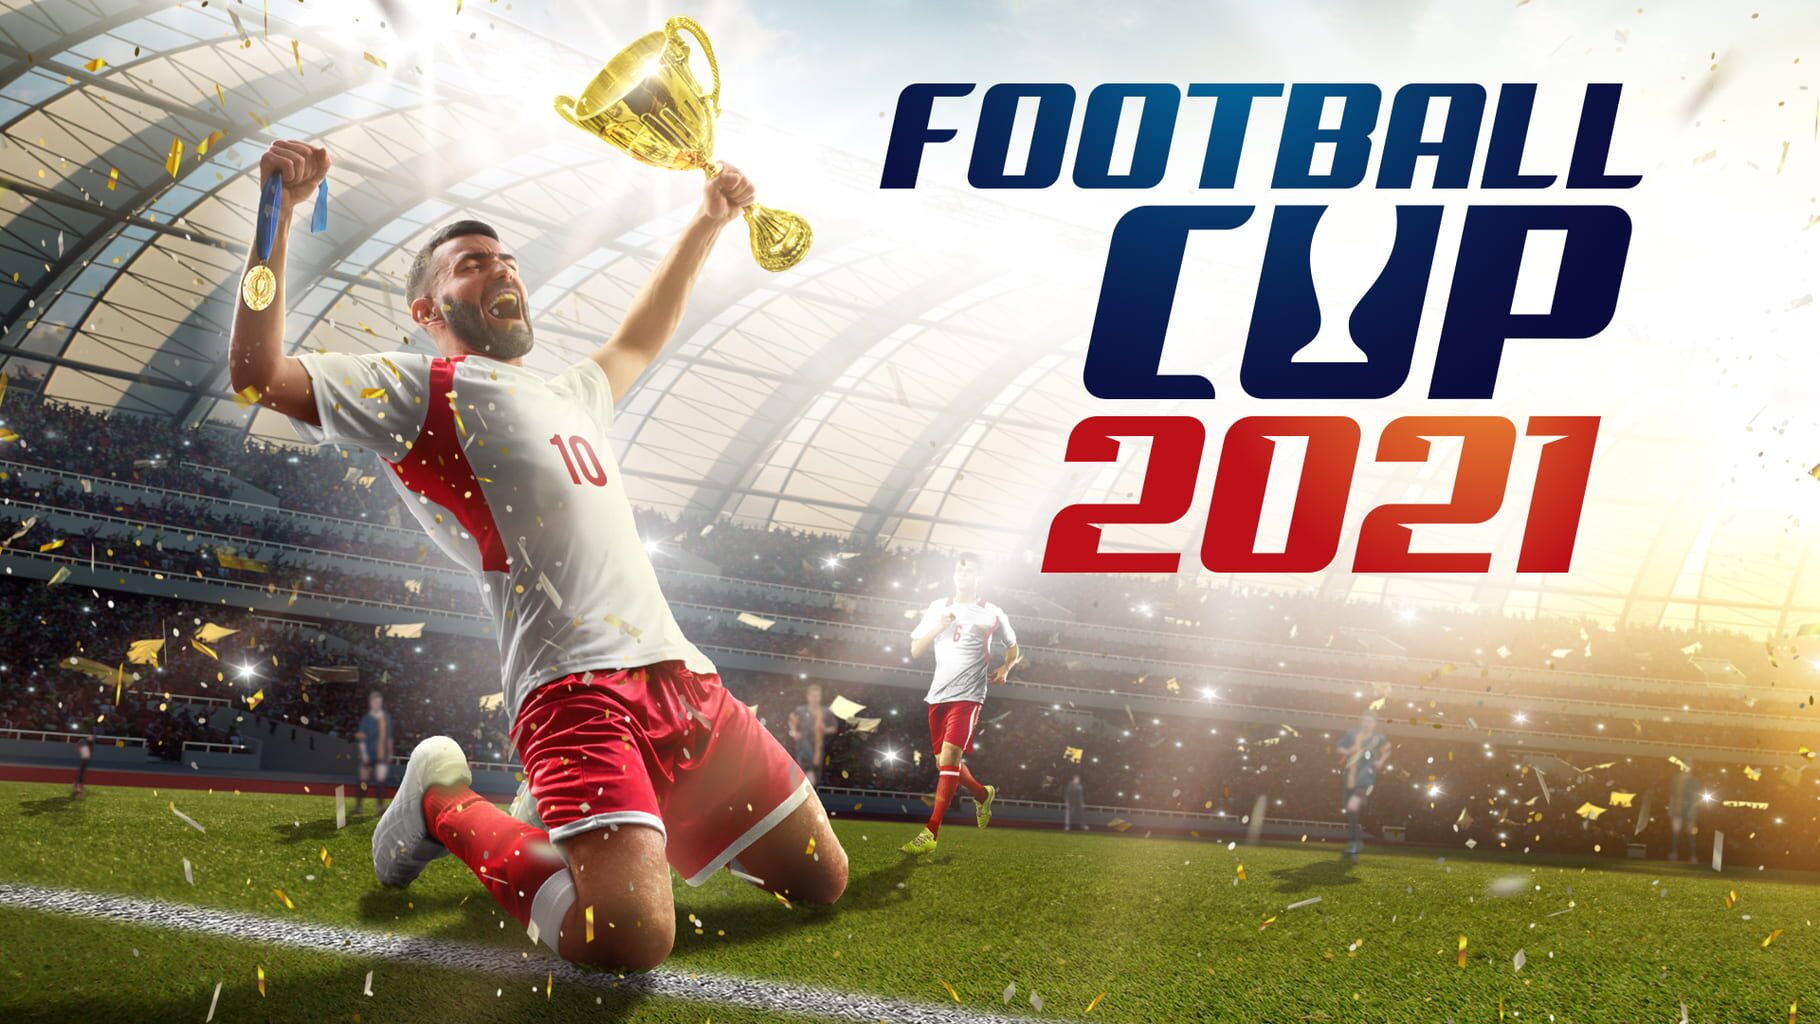 Football Cup 2021 artwork